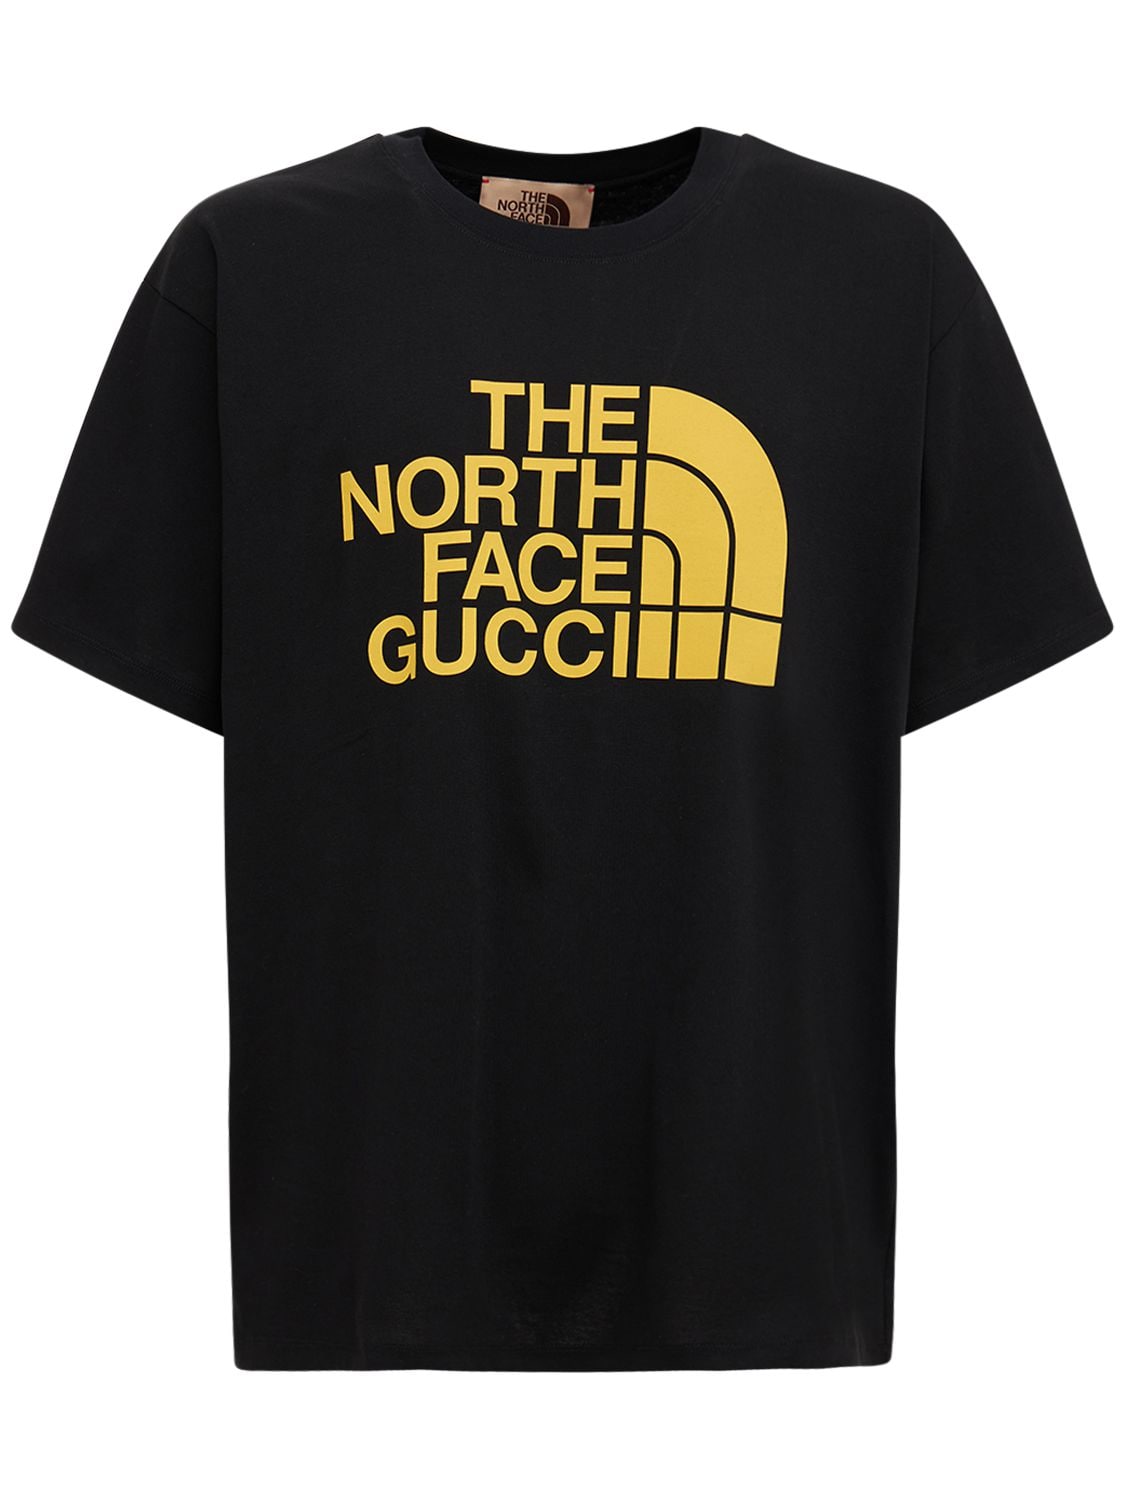 The North Face x Gucci Men's Plain Jacket